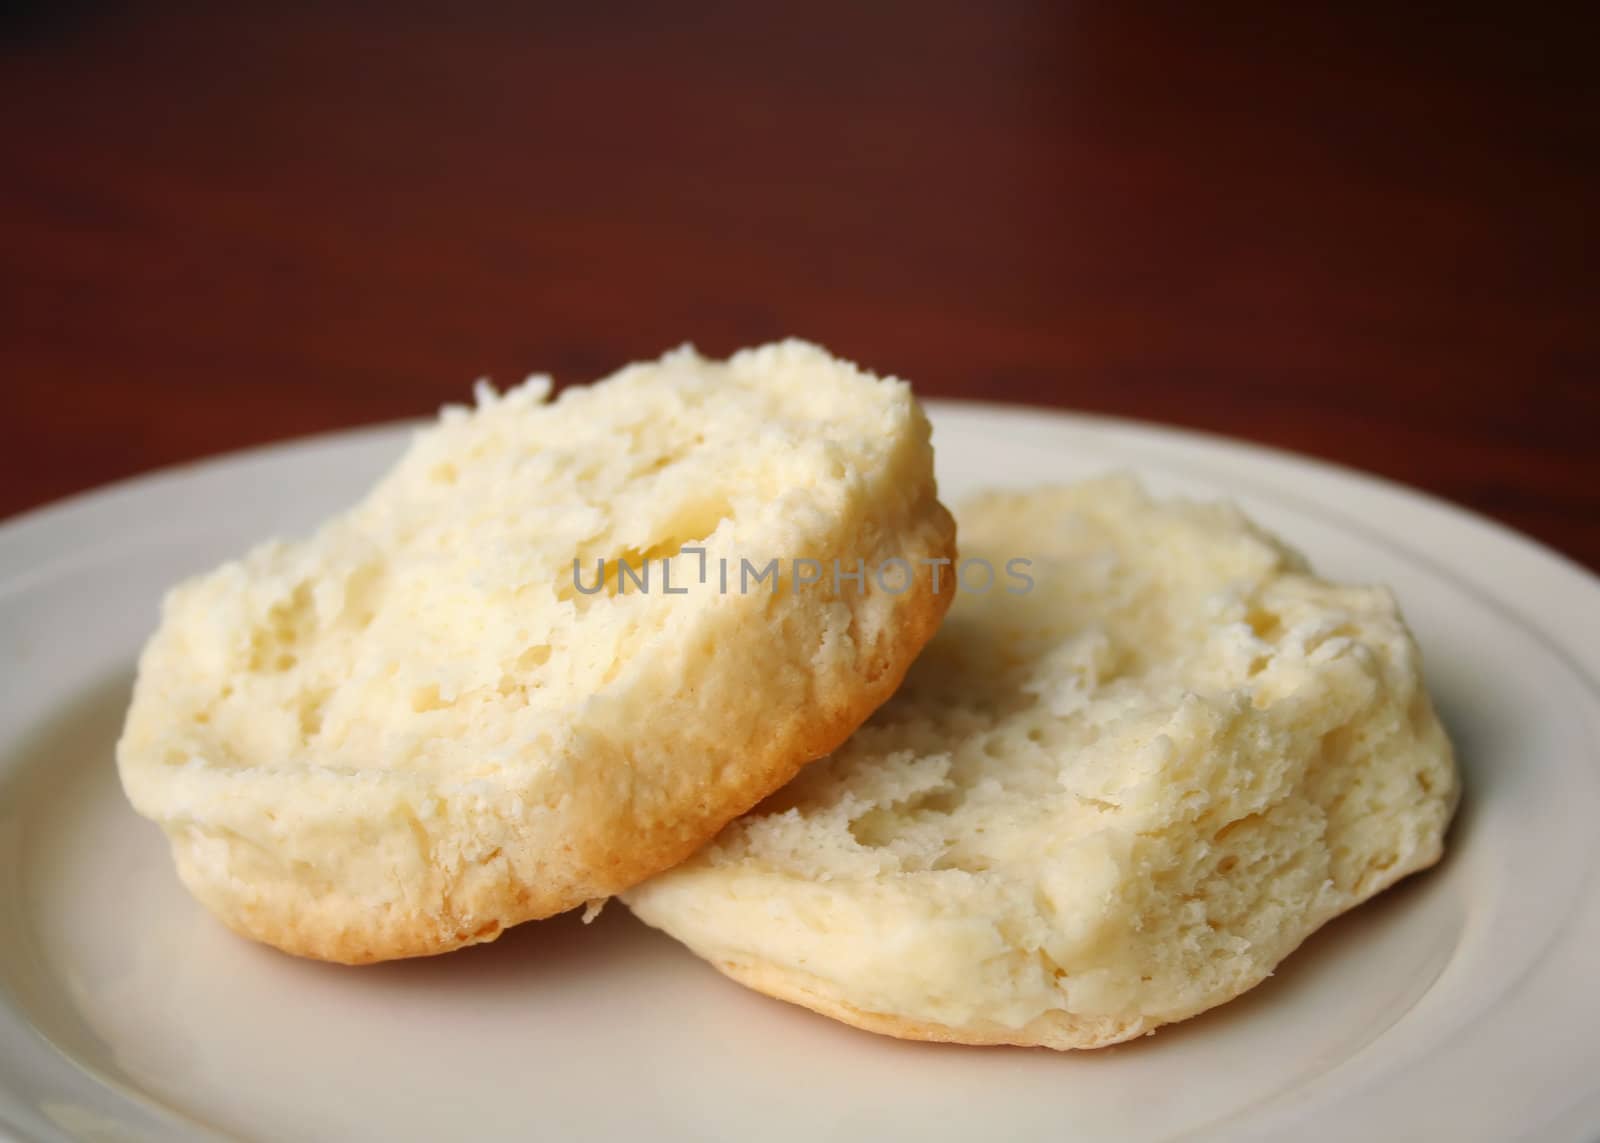 fresh sliced biscuit

